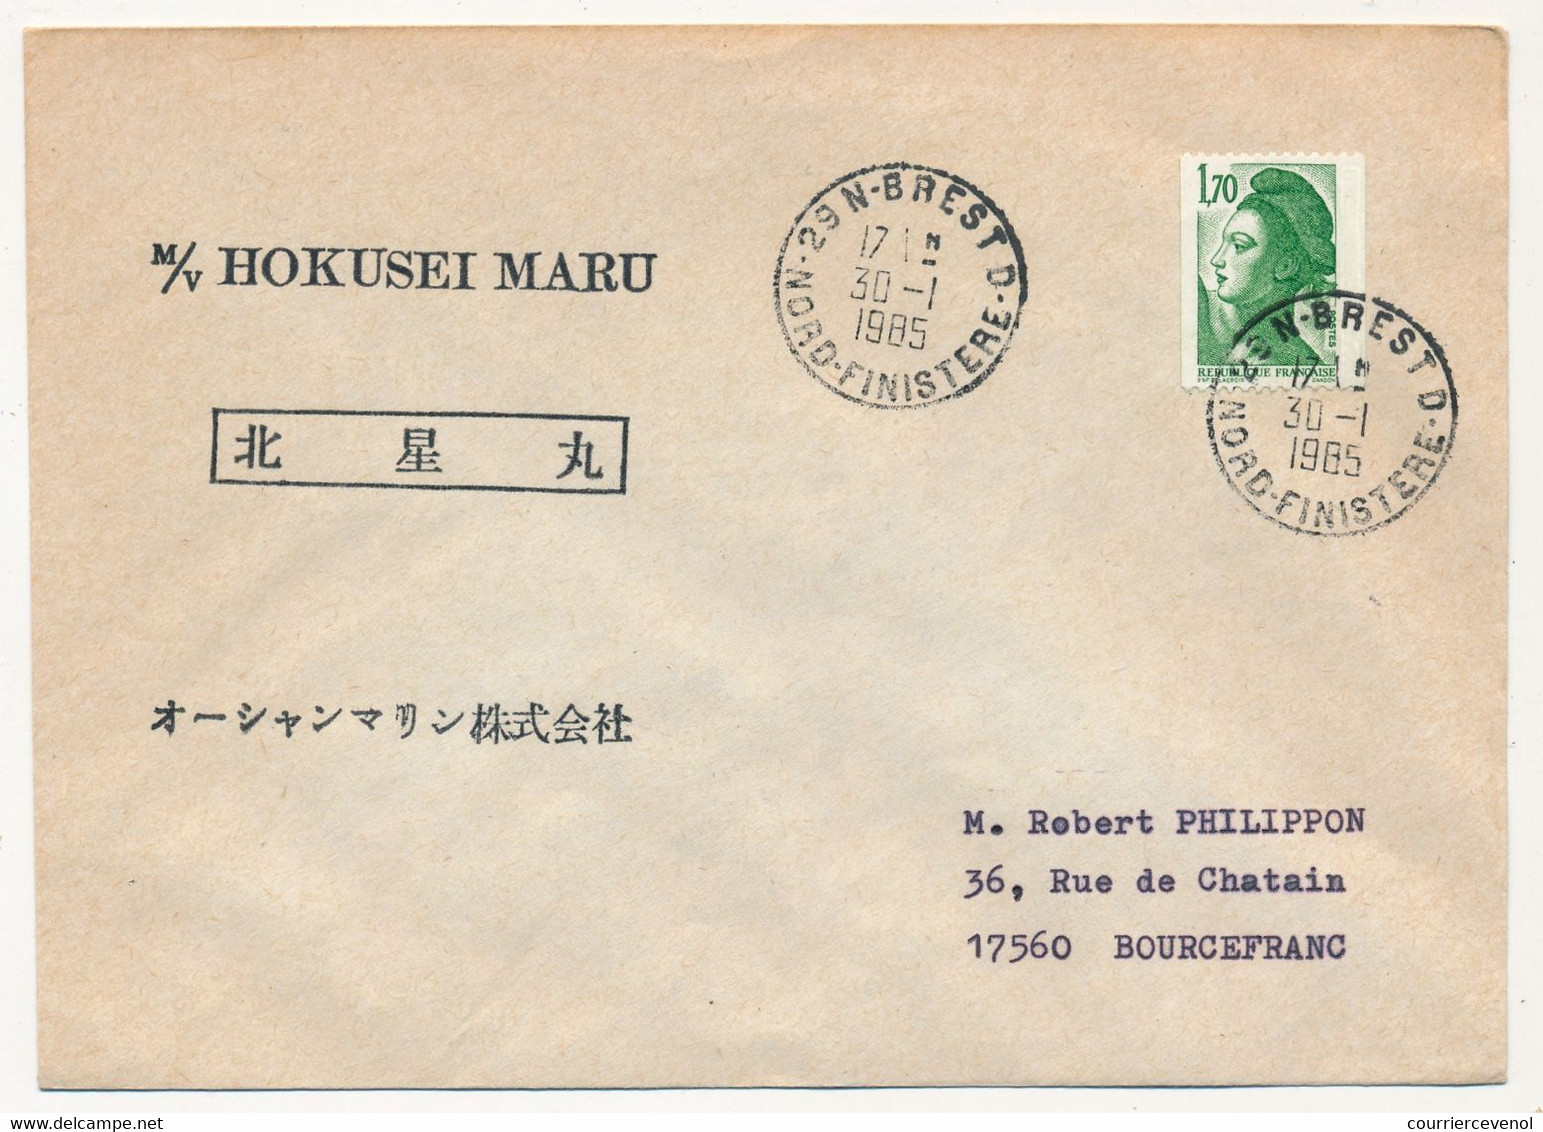 FRANCE - Env. Affr 1,70F Liberté - Obl BREST D 30/1/1985 - M/V Hokusei Maru - Poste Maritime